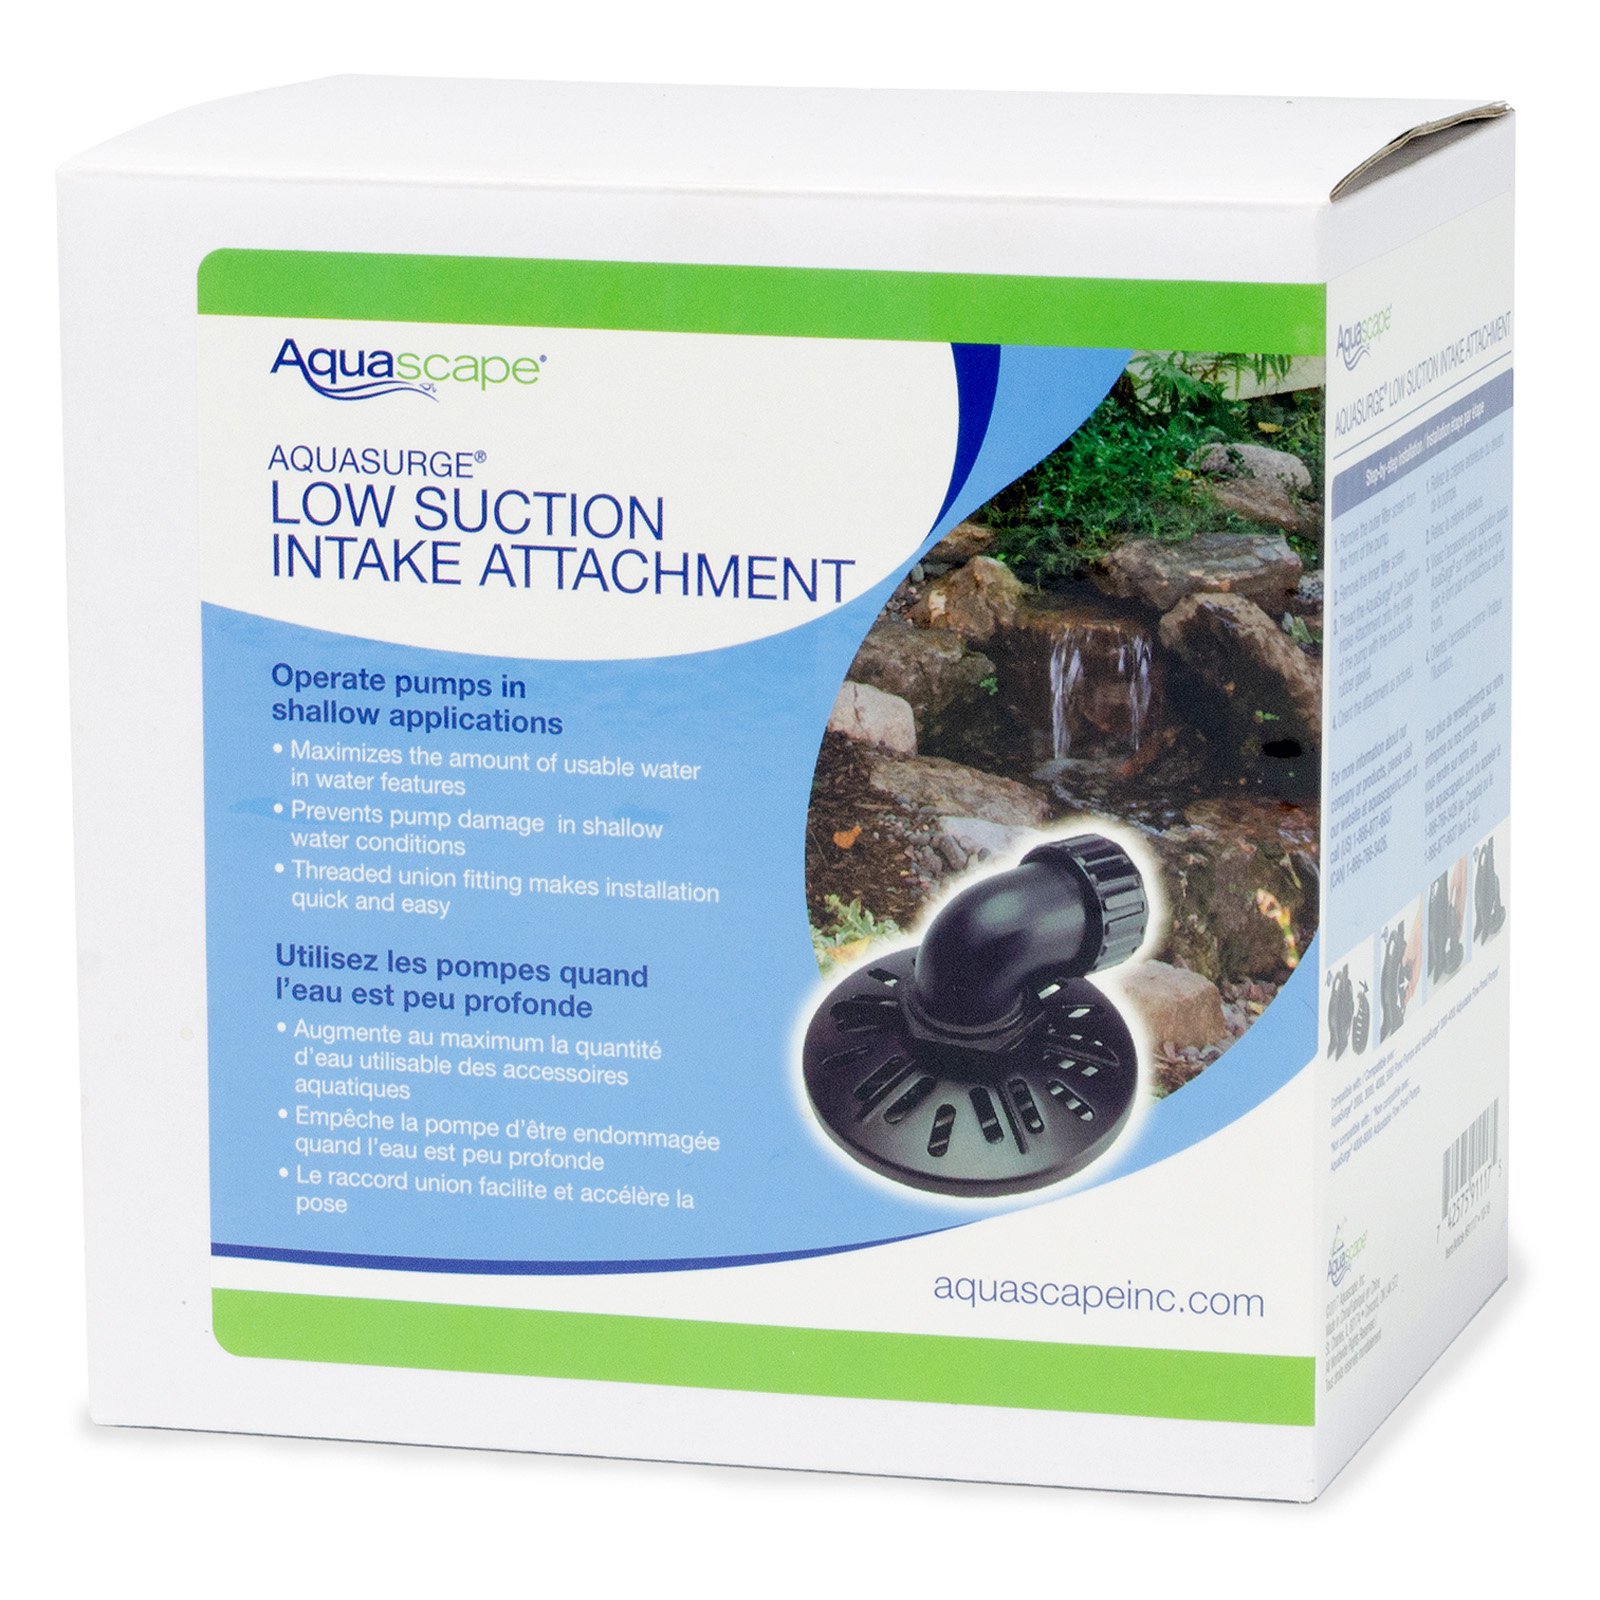 Aquascape 91117 Aquasurge Low Suction Intake Attachment - image 4 of 5